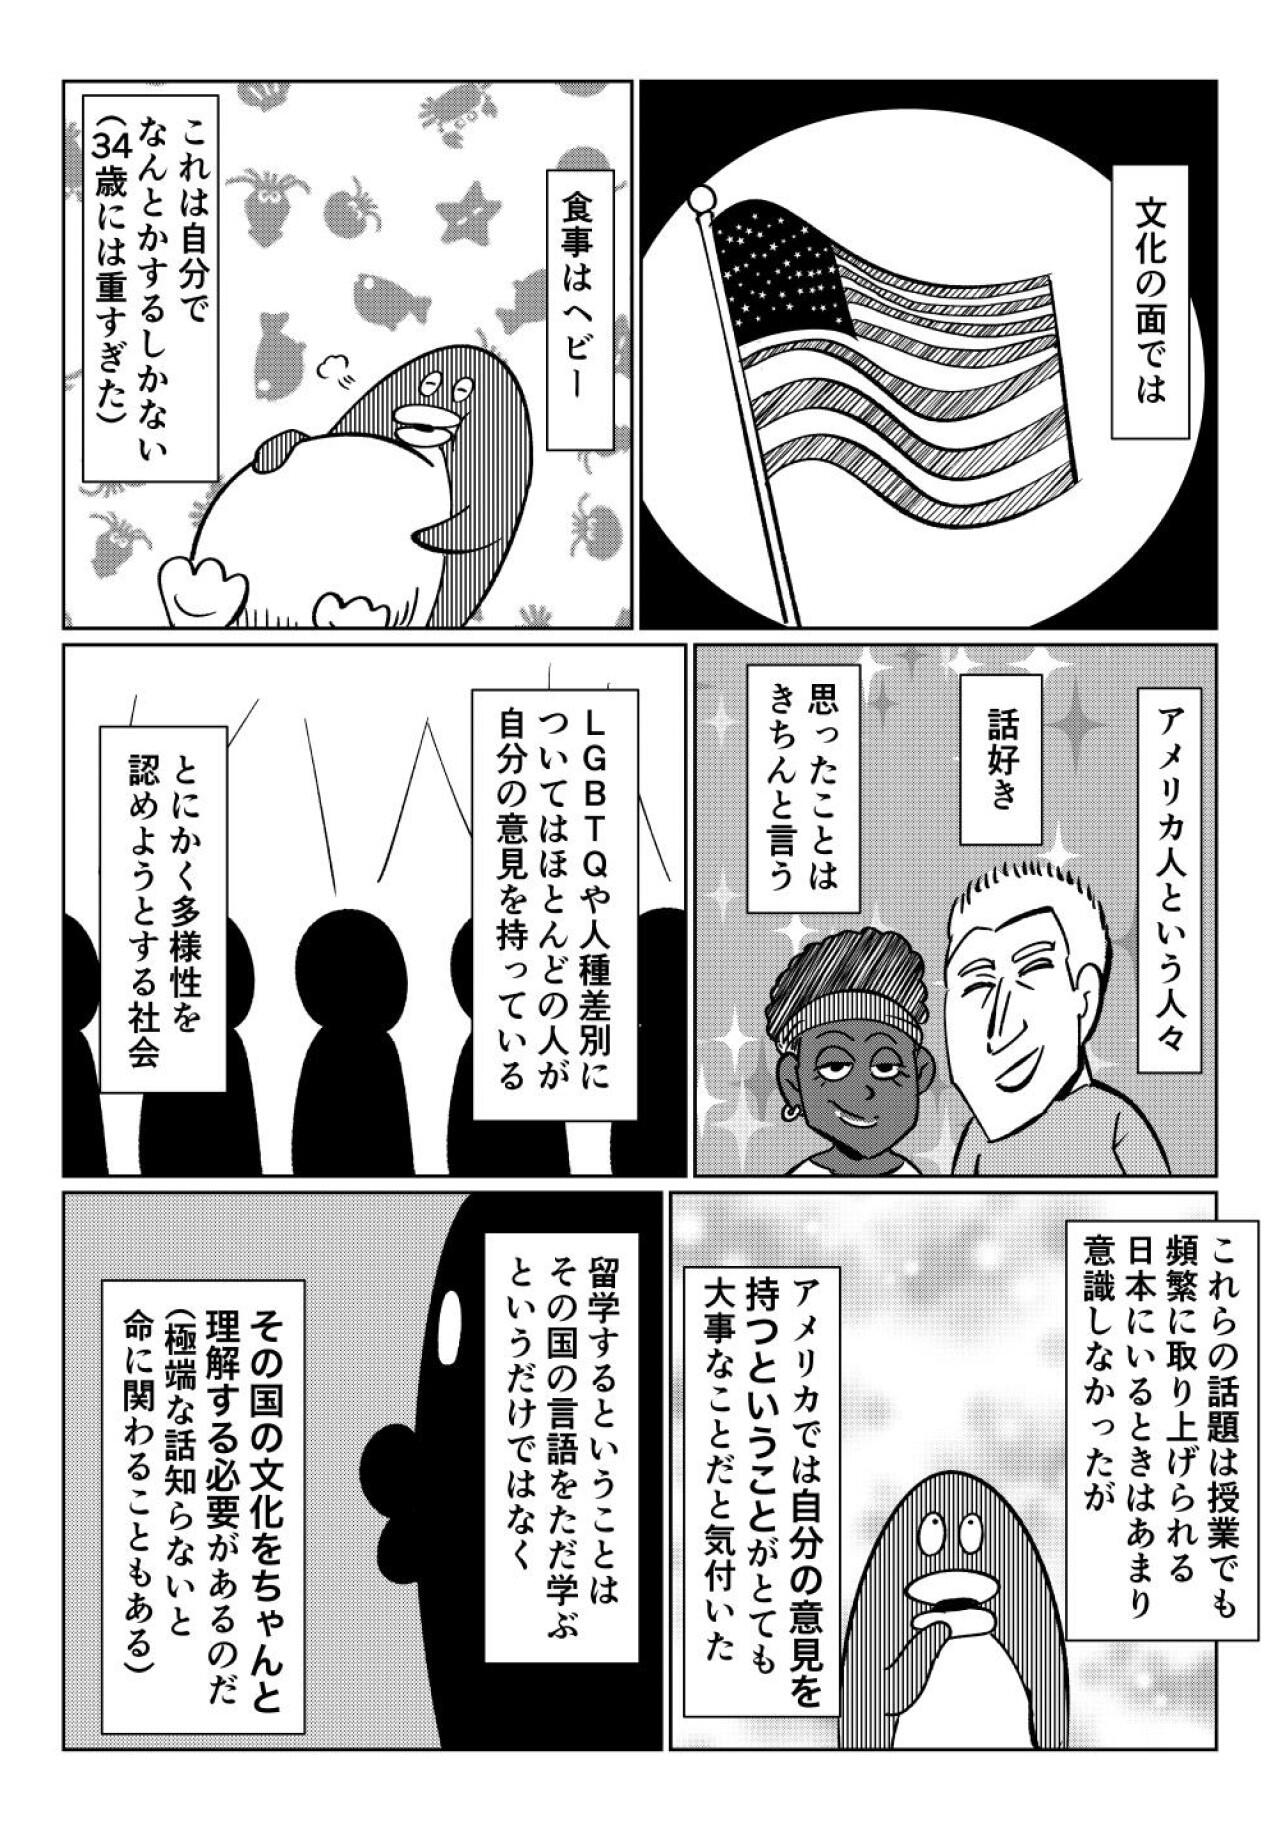 https://www.ryugaku.co.jp/column/images/34sai15_3_1280.jpg